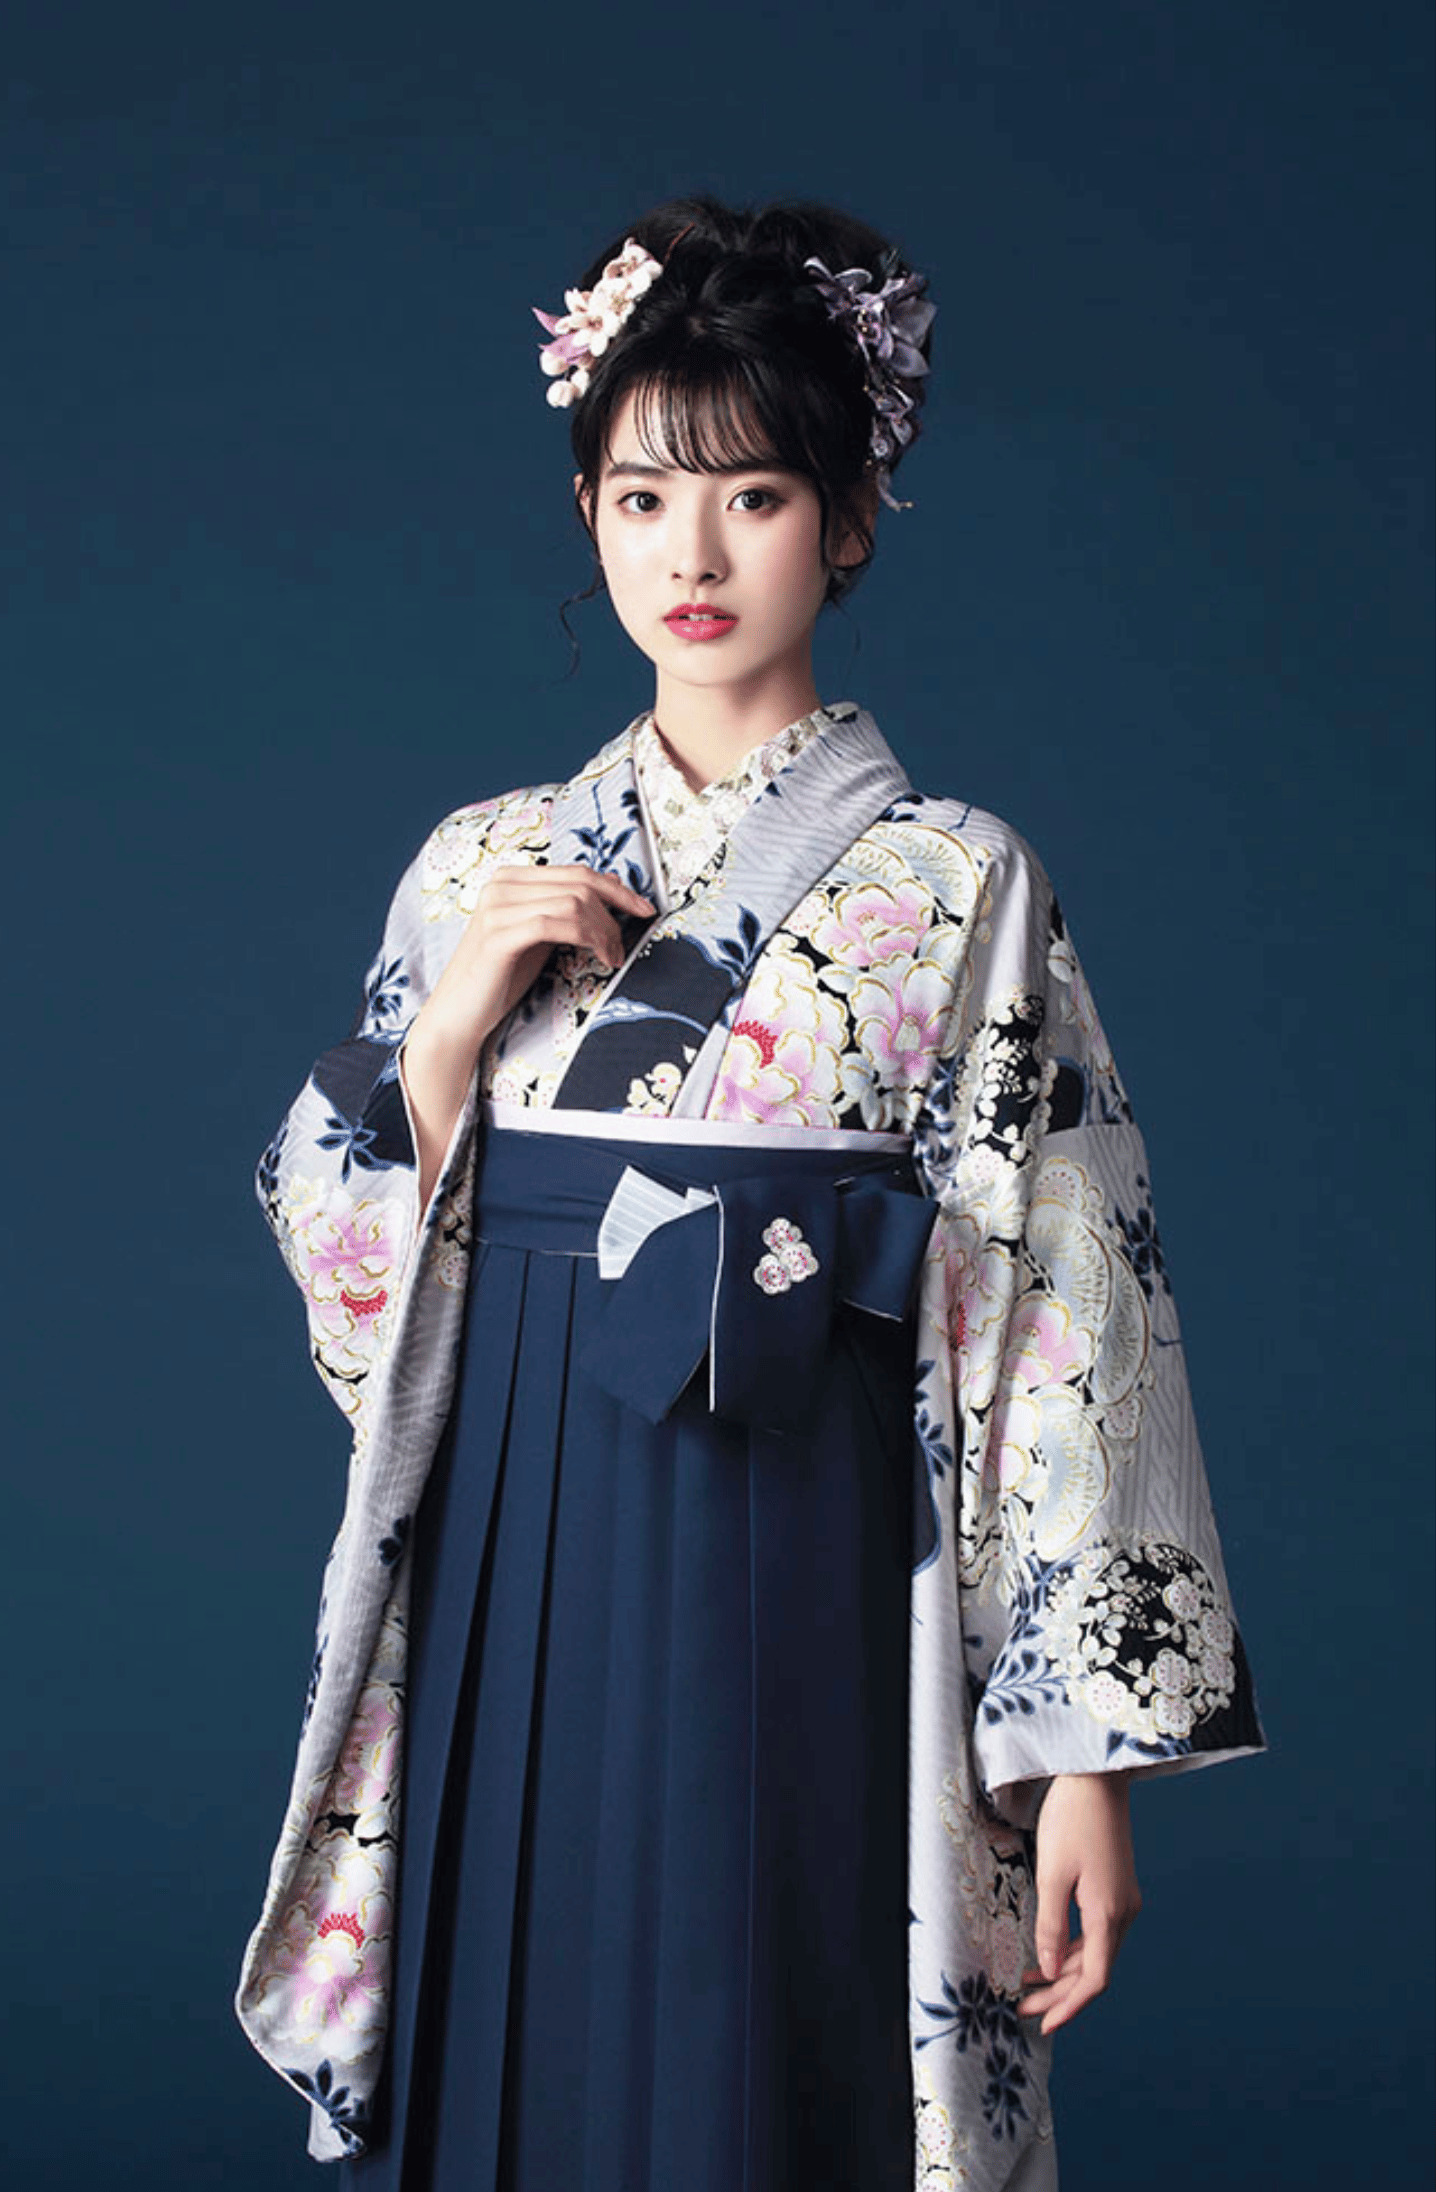 NATURAL BEAUTYブランドの、紺地に花柄の二尺袖と、紺の袴の女性用卒業式袴を着用したポートレート